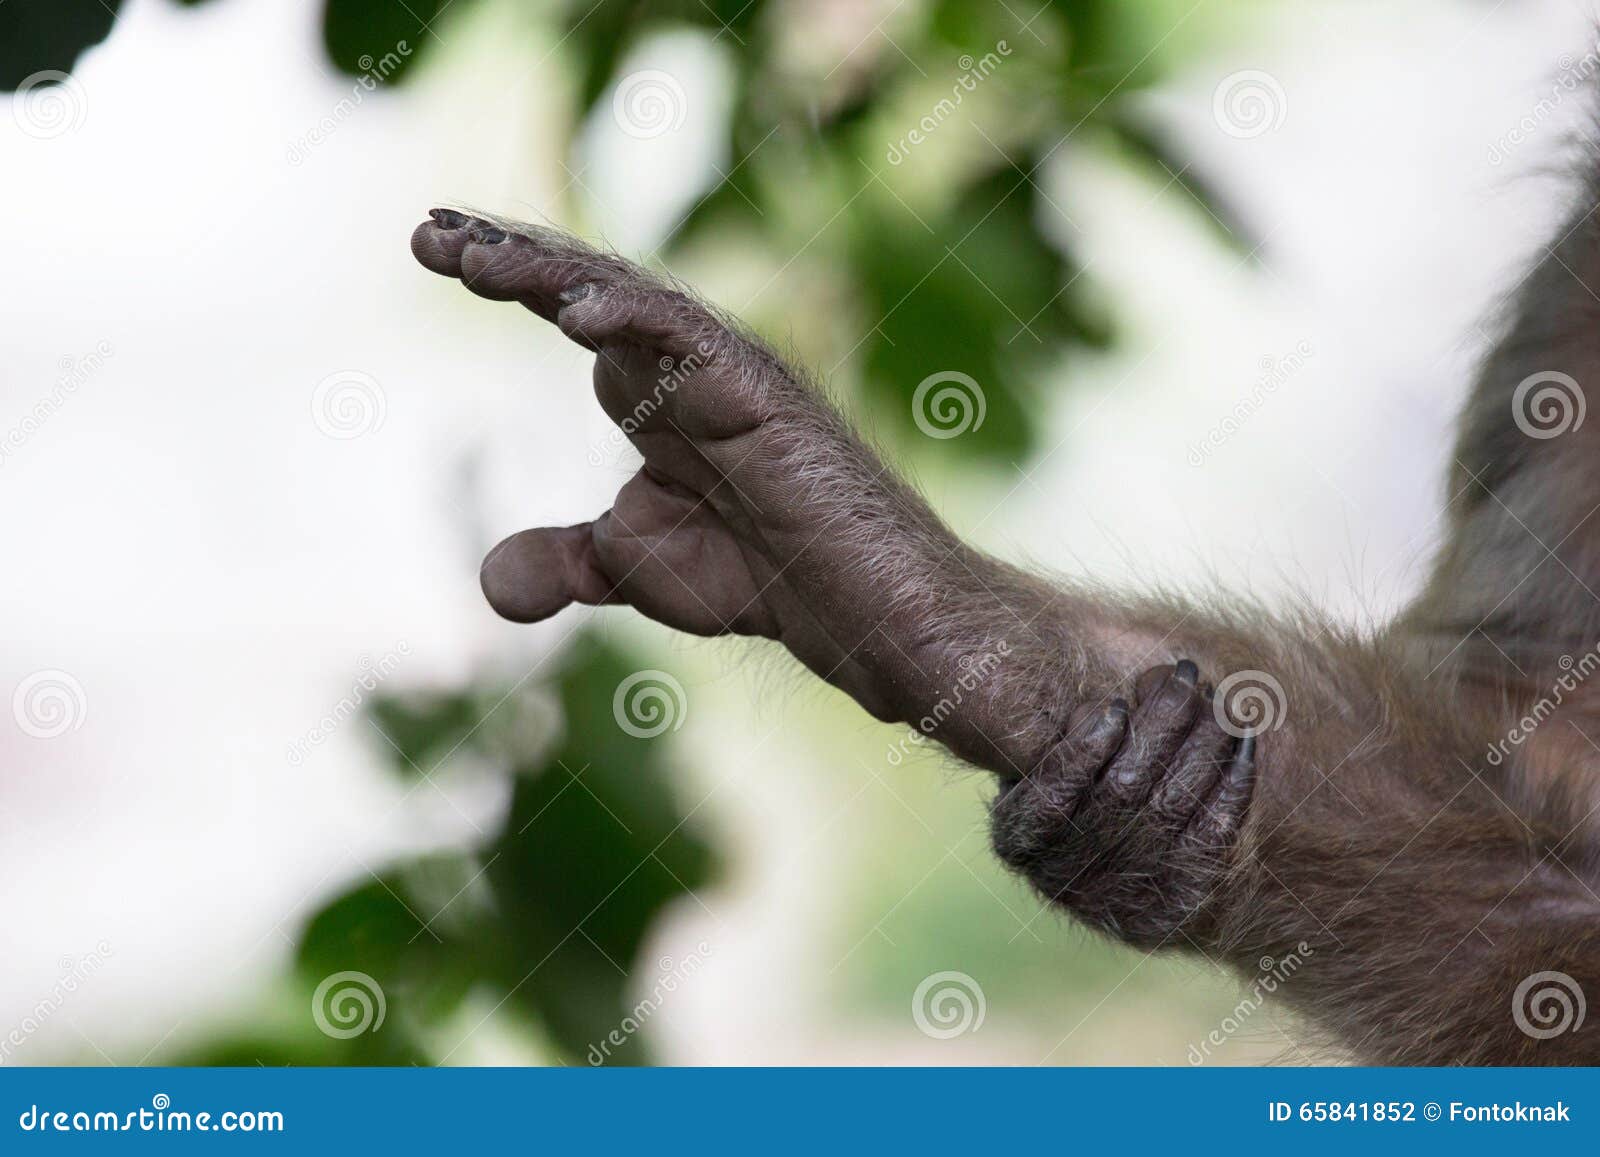 Transplanteren Balling Afwijking Monkey hands and feet stock photo. Image of thailand - 65841852